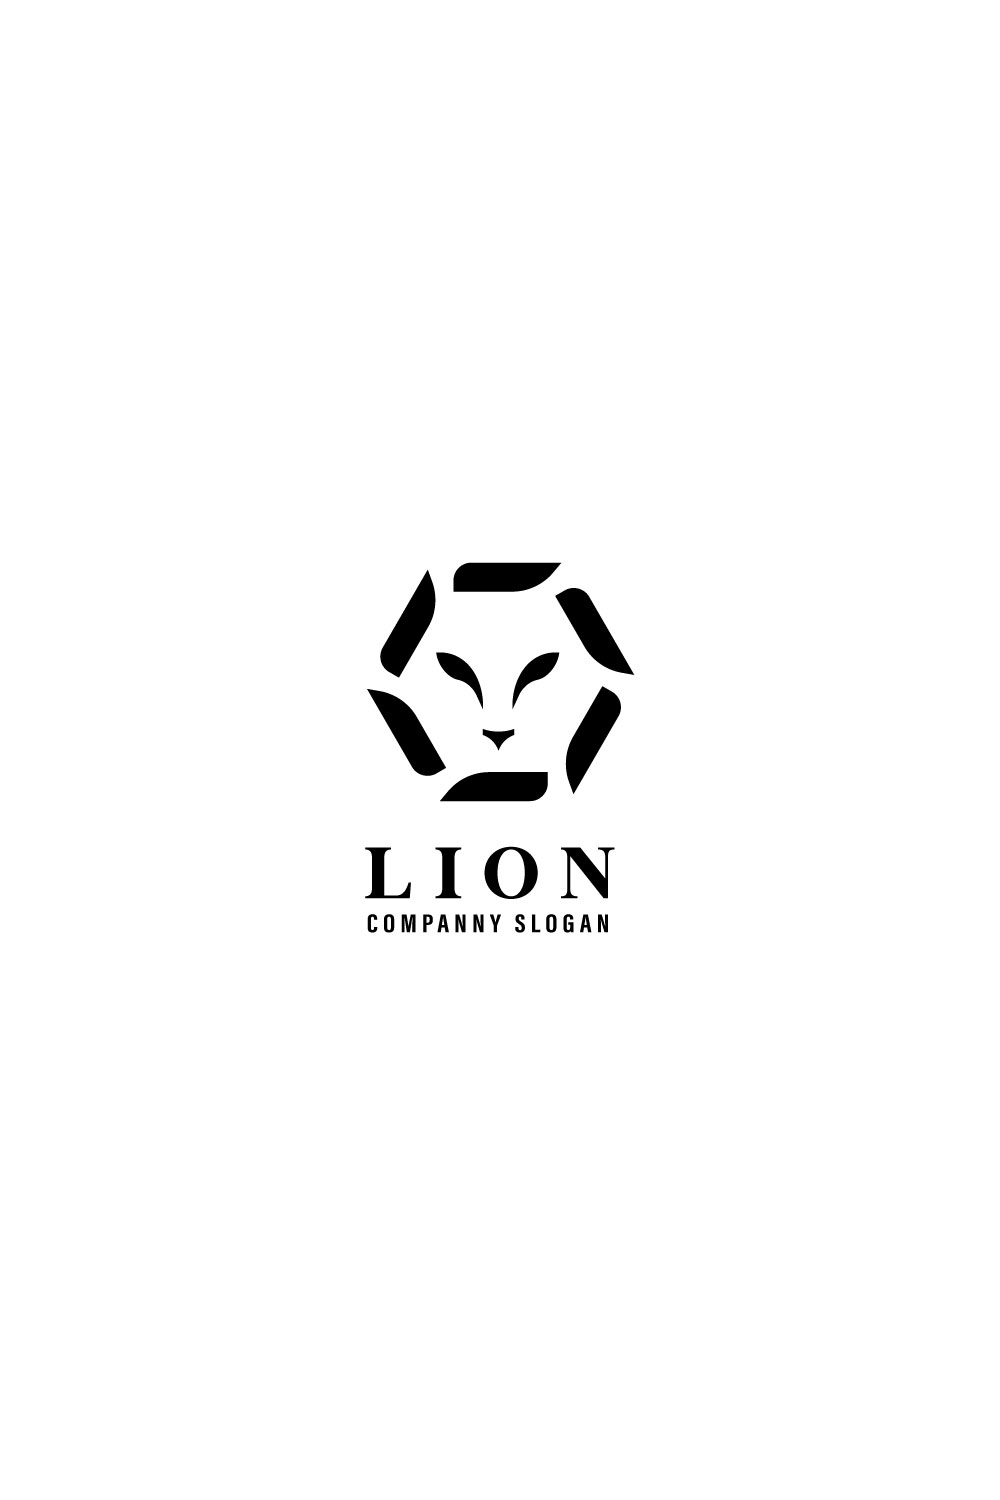 Lion Company Logo pinterest preview image.